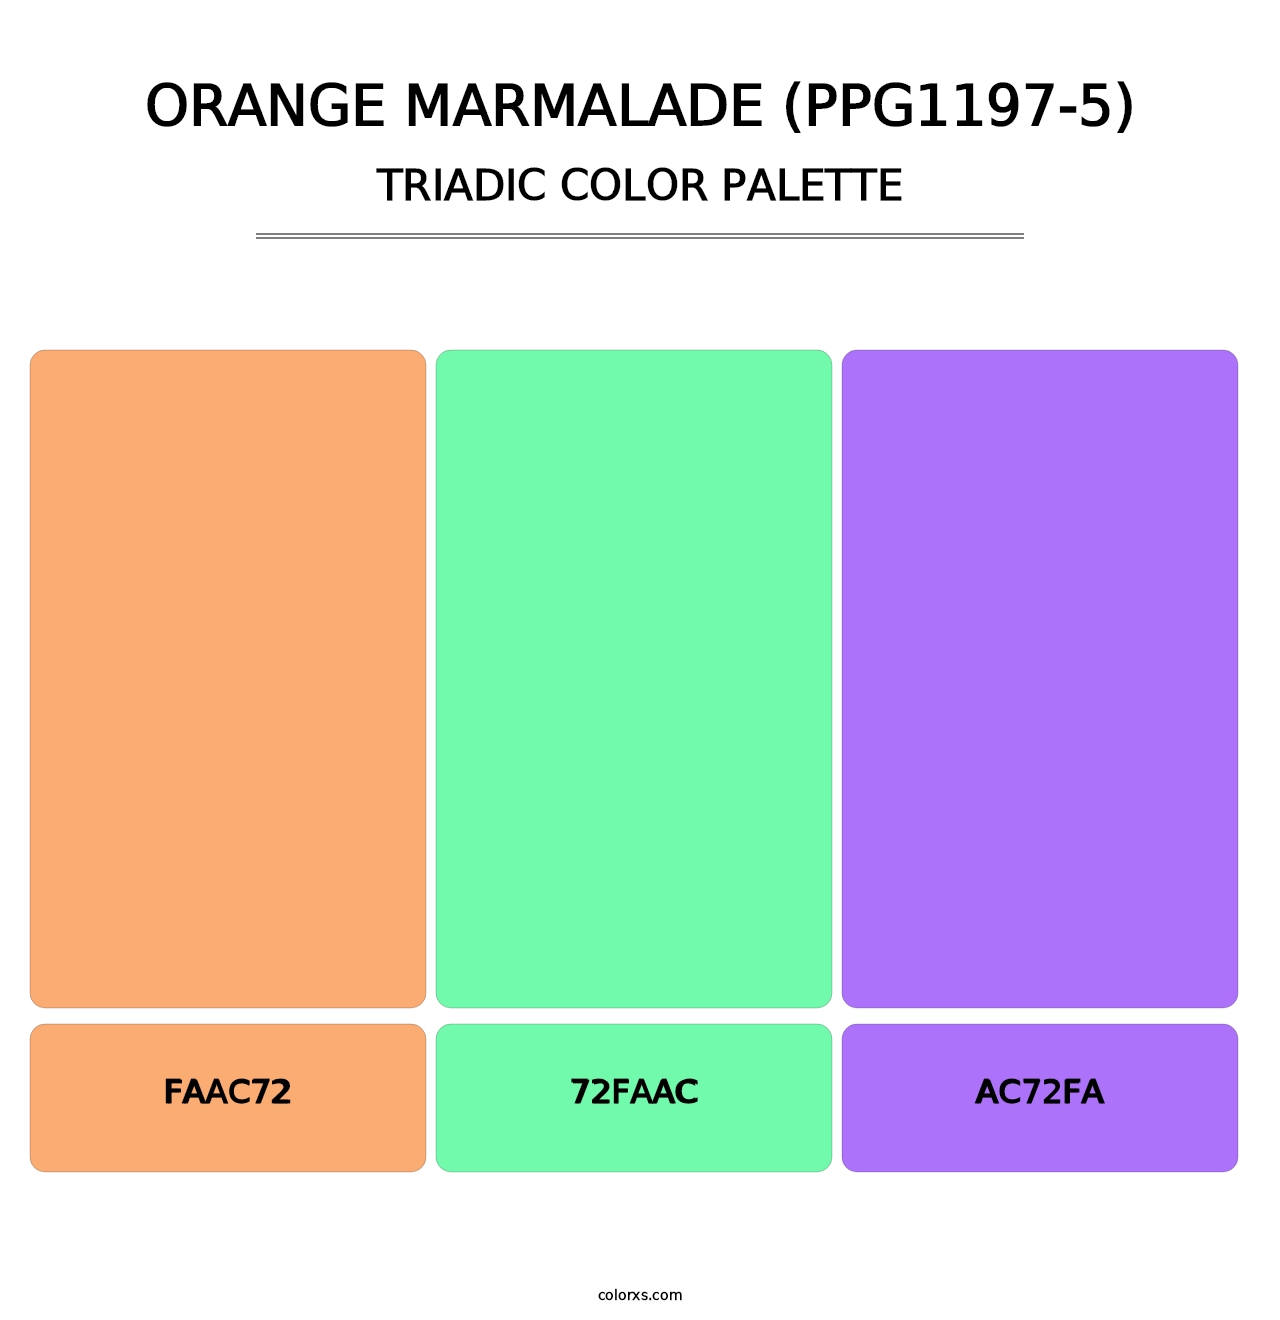 Orange Marmalade (PPG1197-5) - Triadic Color Palette